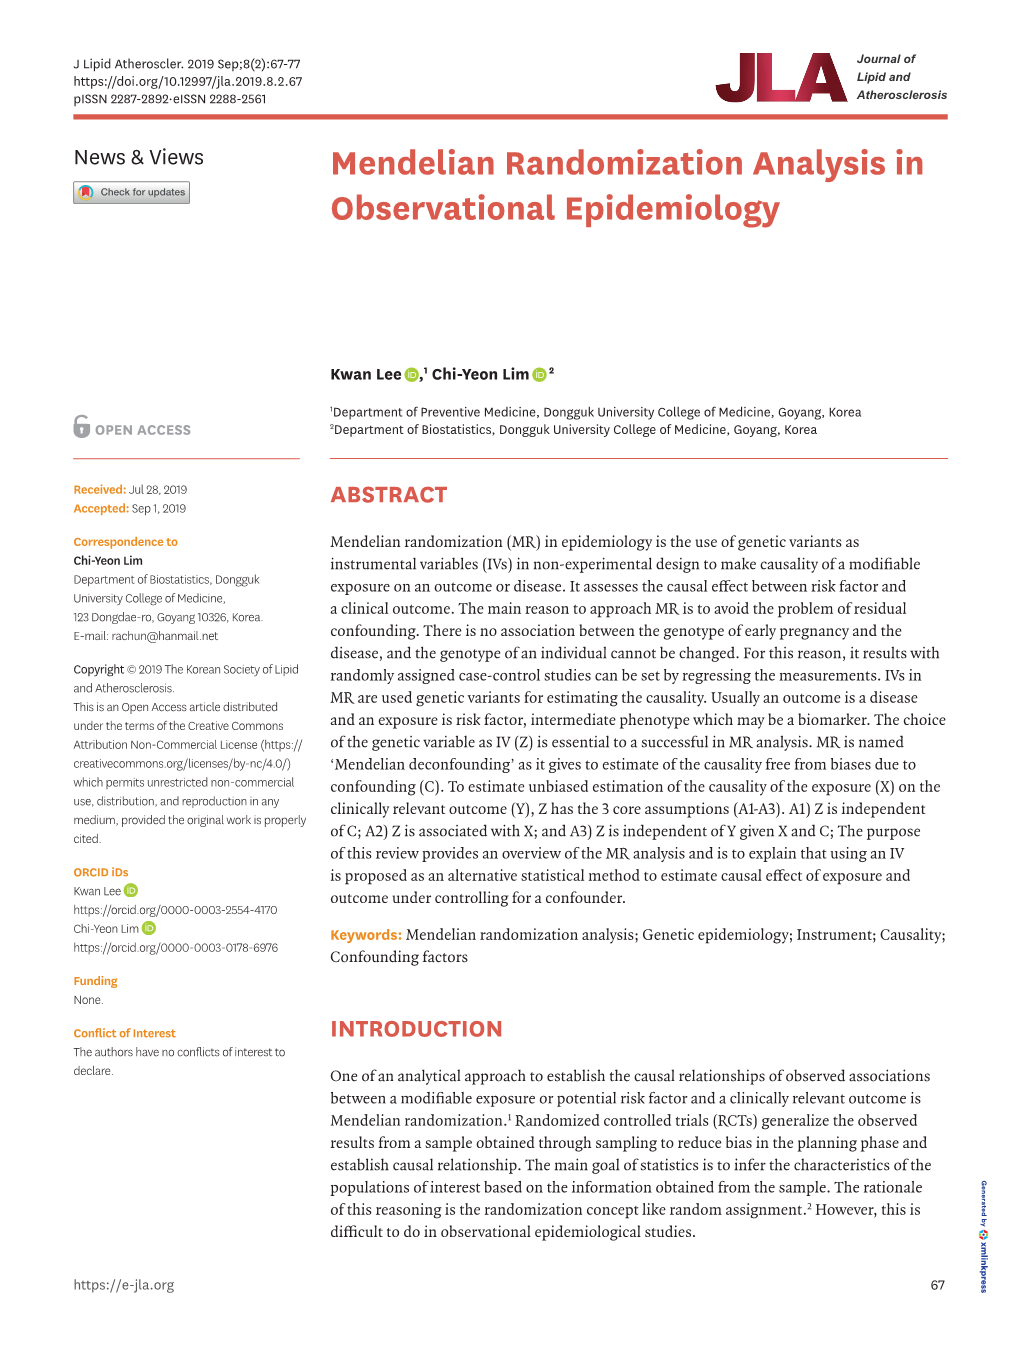 Mendelian Randomization Analysis in Observational Epidemiology